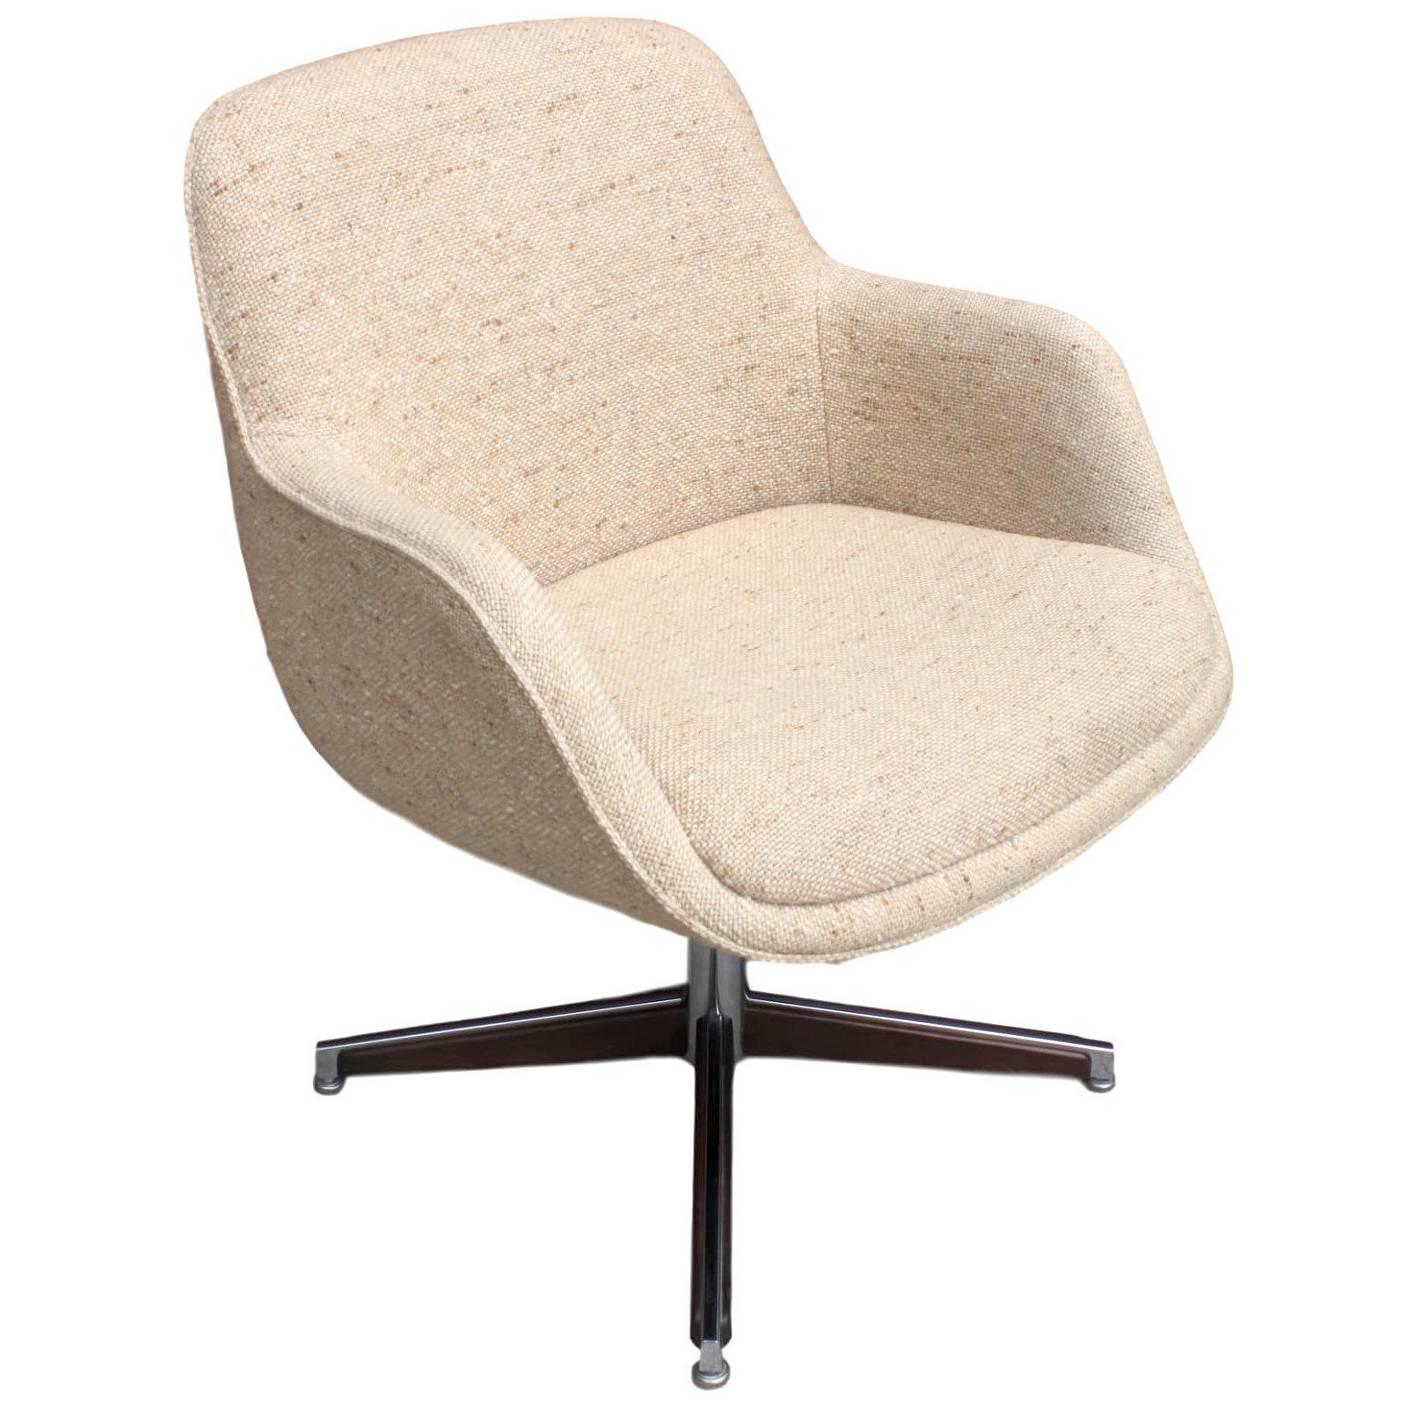 1960s, Mid-Century Modern Walnut & Chrome Desk Chair with Cream Upholstery